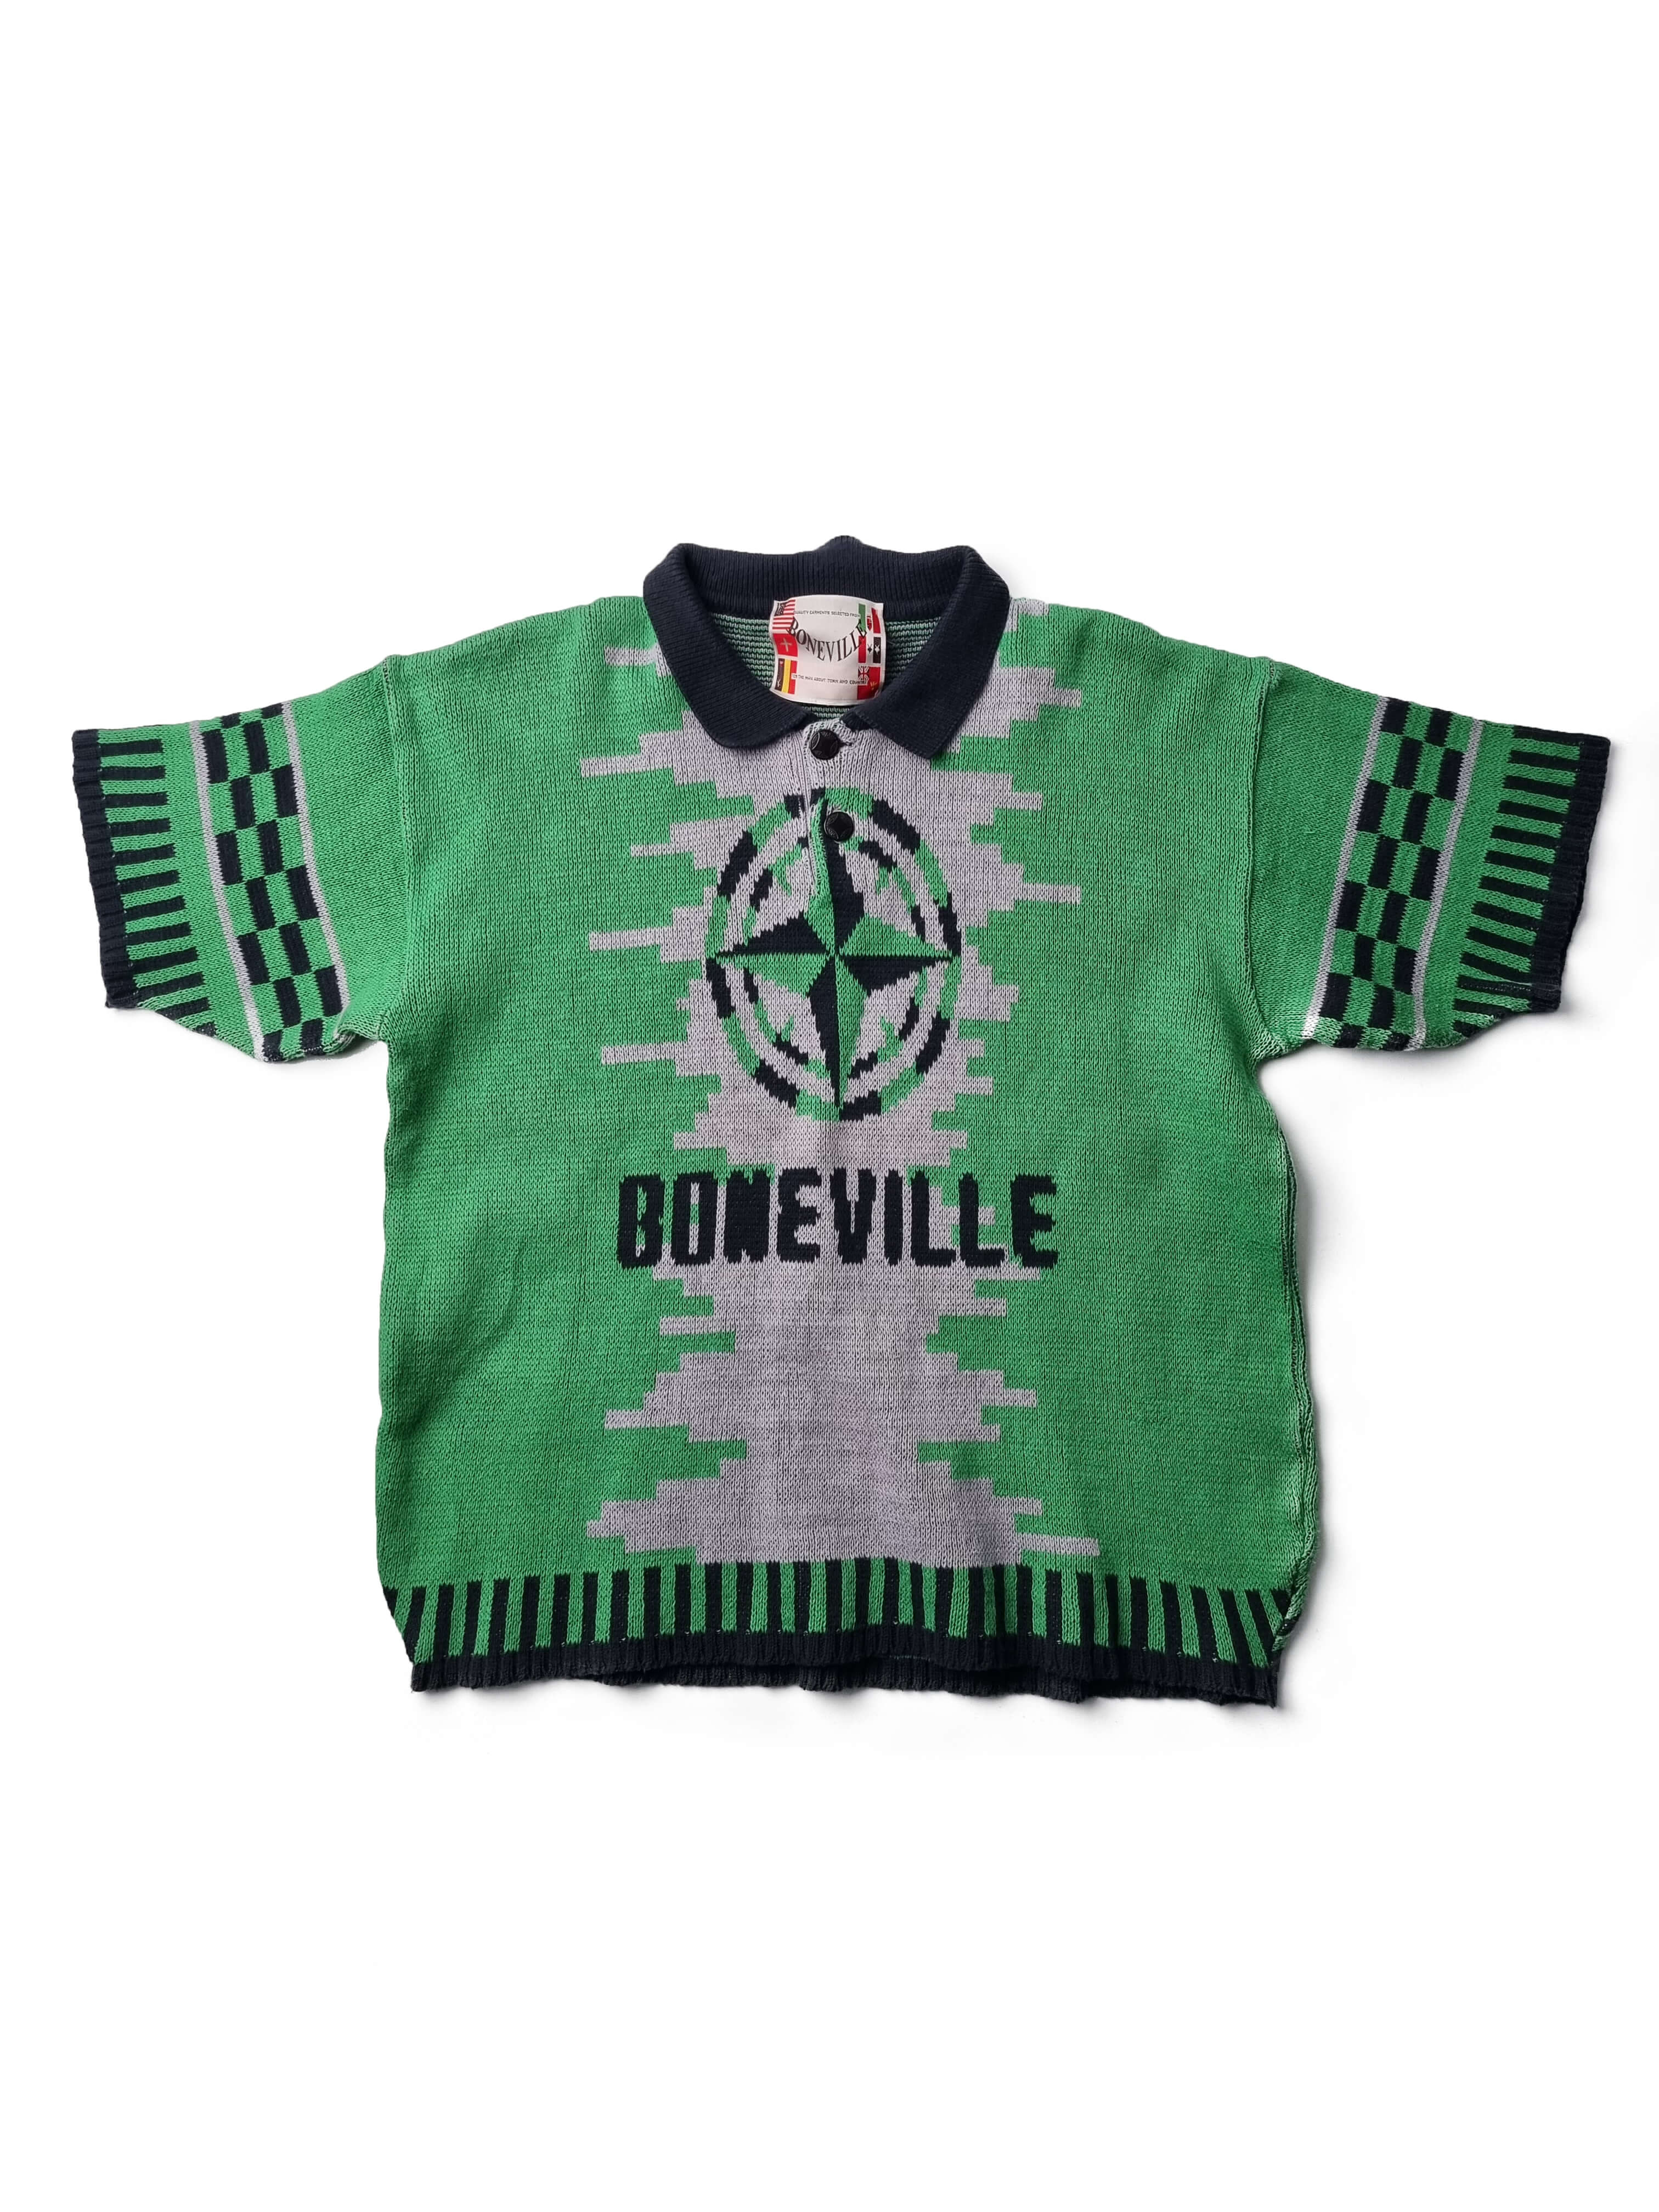 BONEVILLE 80s sweater